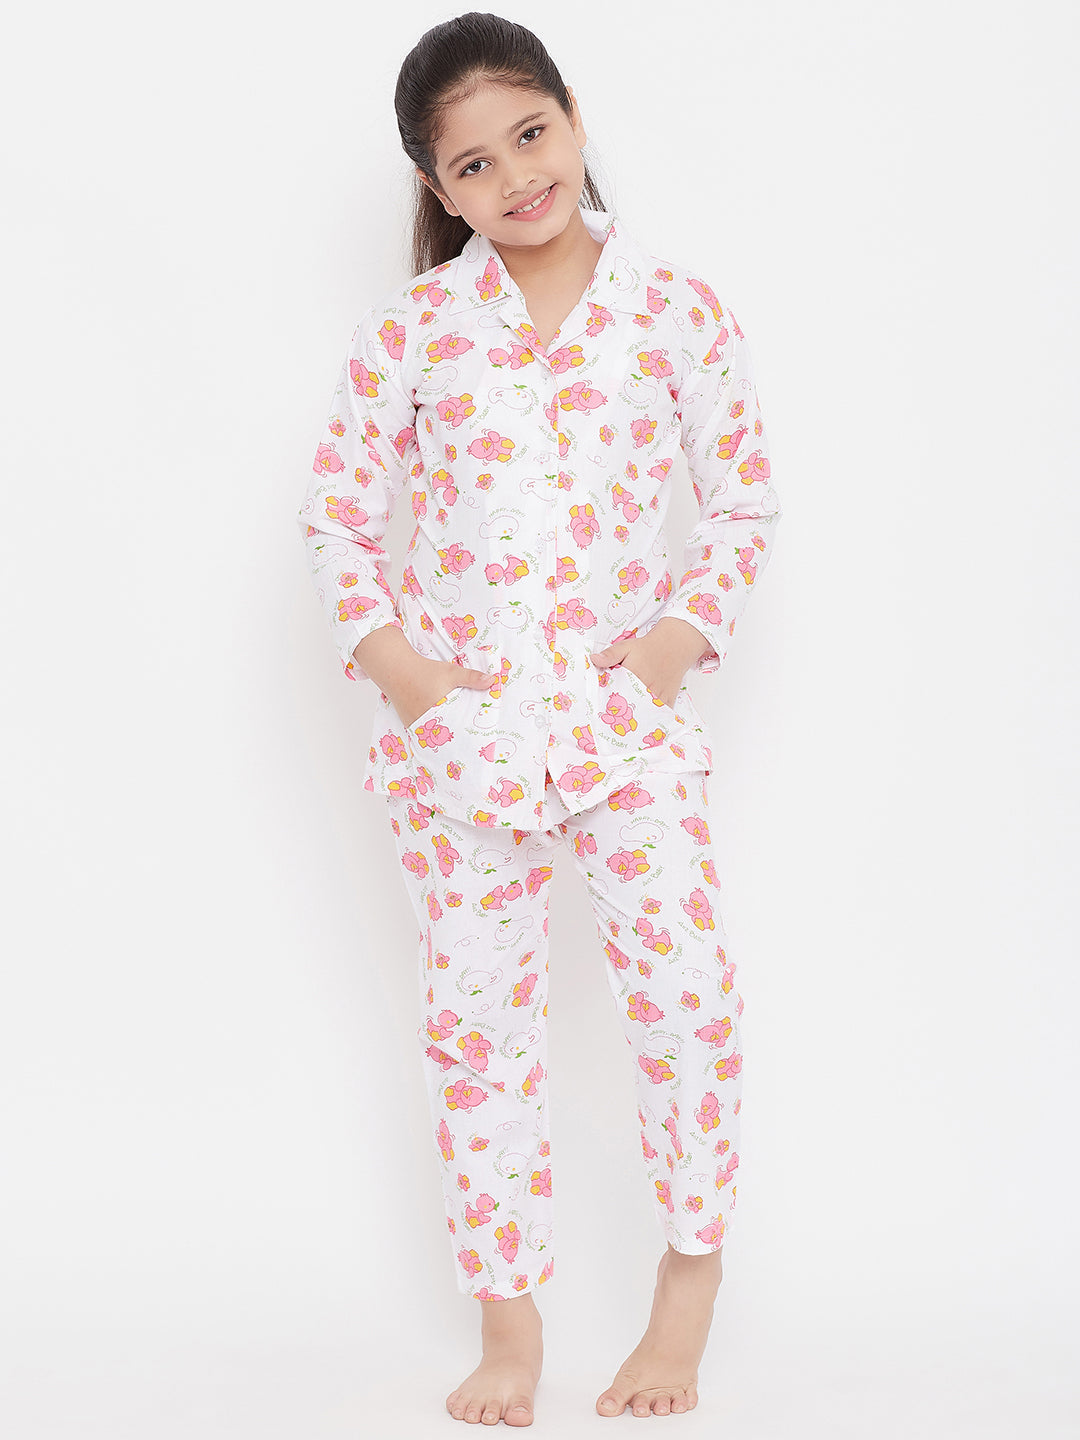 Kydzi White & Pink Printed Rayon Nightsuit (Pack of 2)